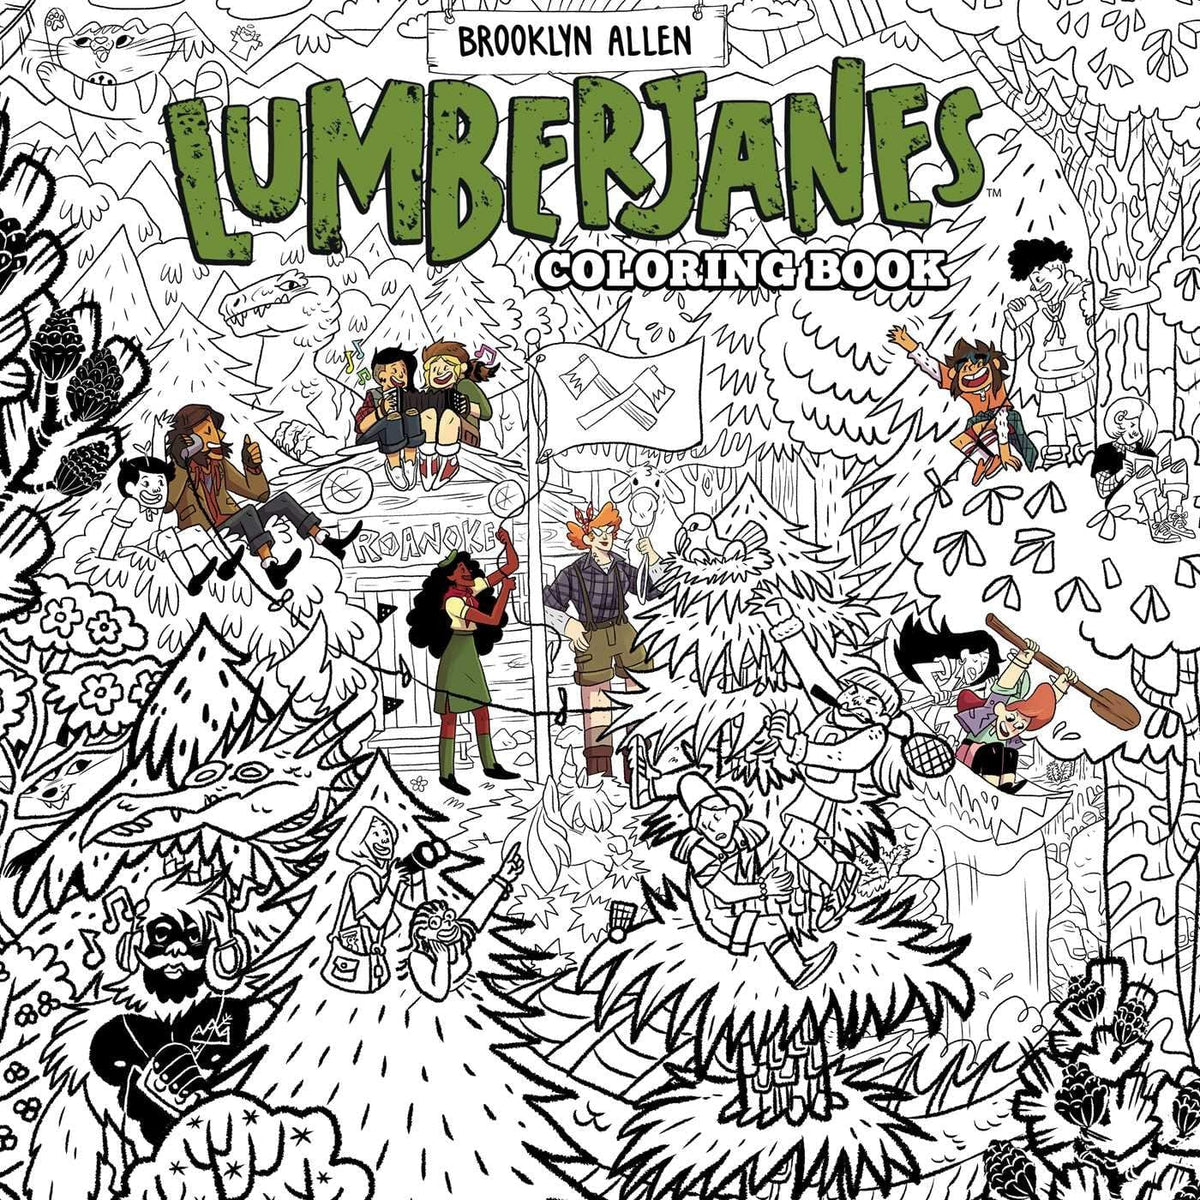 Lumberjanes: Coloring Book - Third Eye